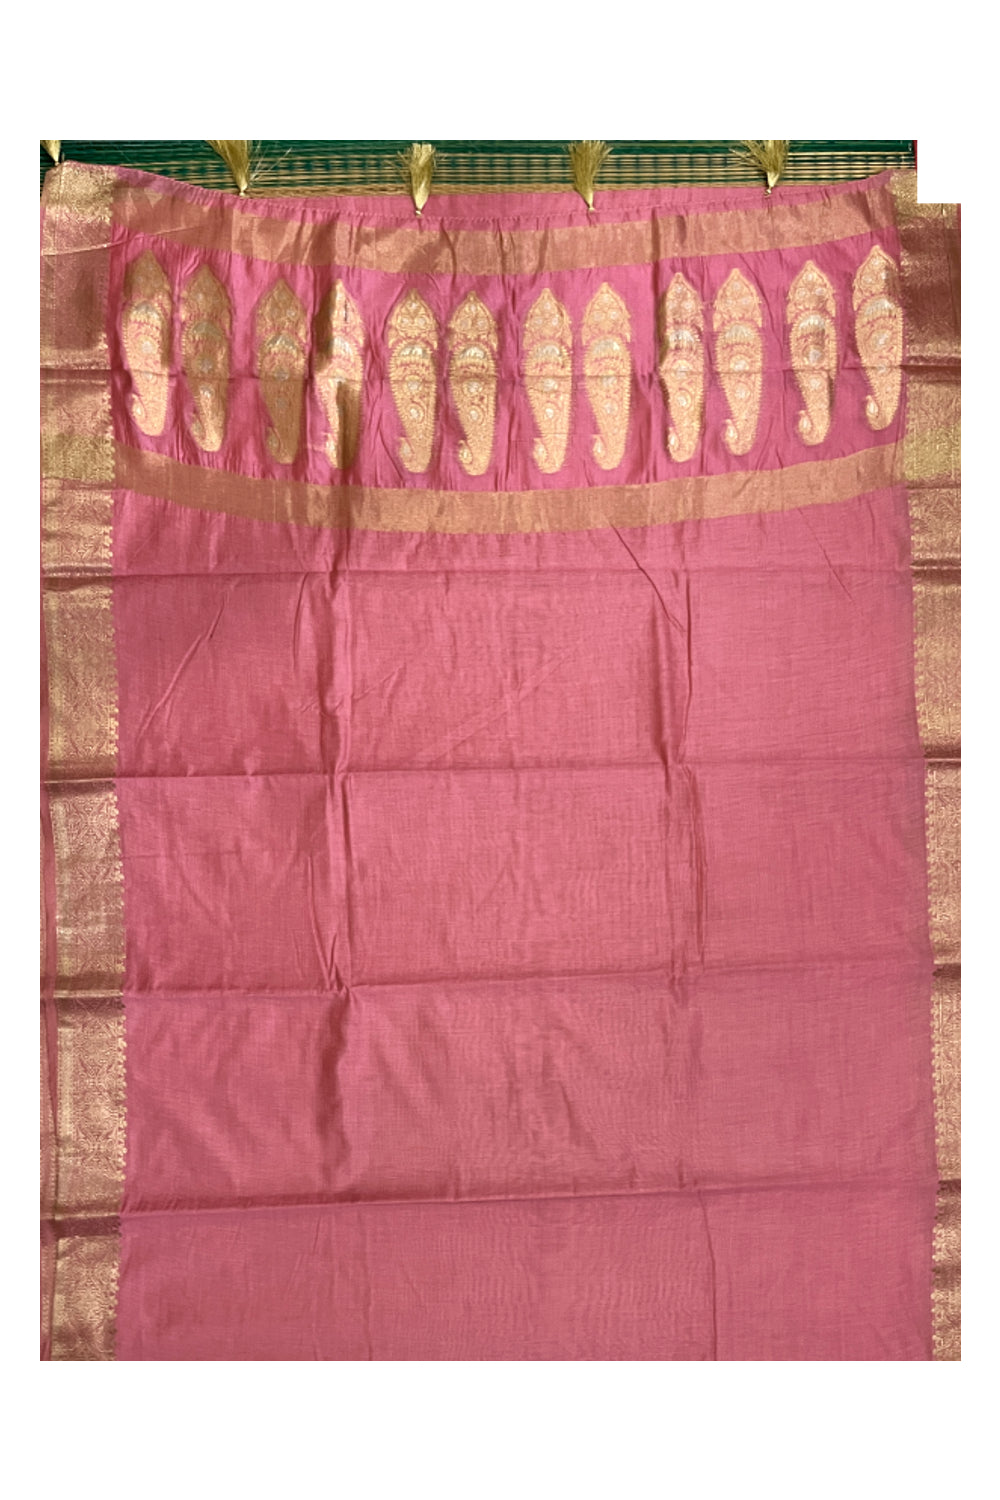 Southloom Cotton Plain Pink Saree with Kasavu Woven Border